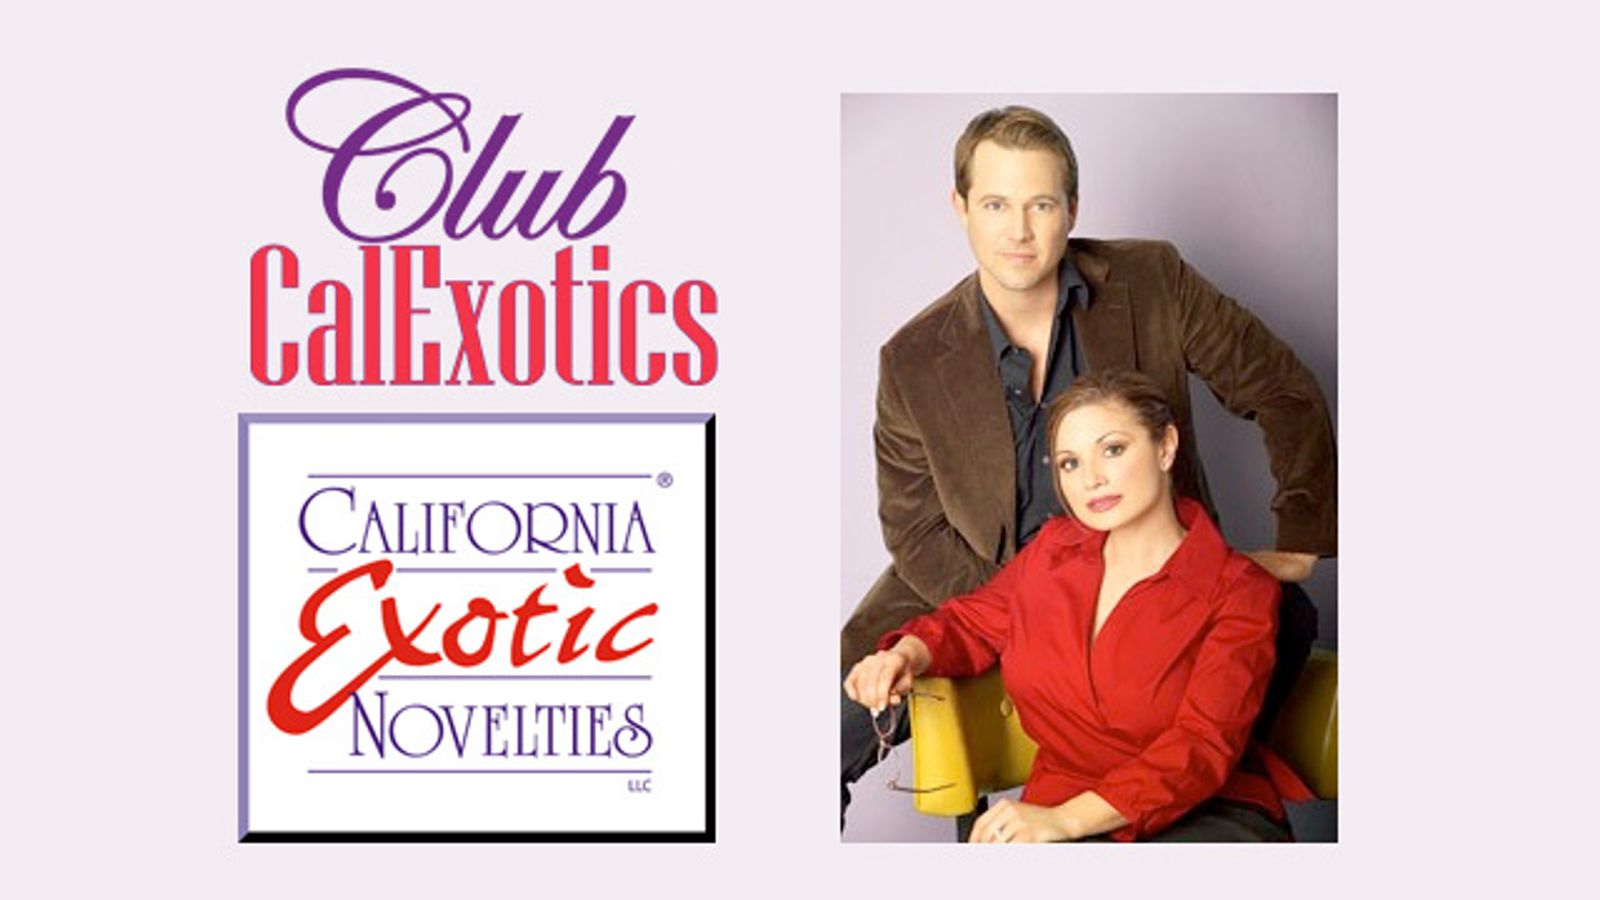 California Exotic Novelties Opens Up Club CalExotics